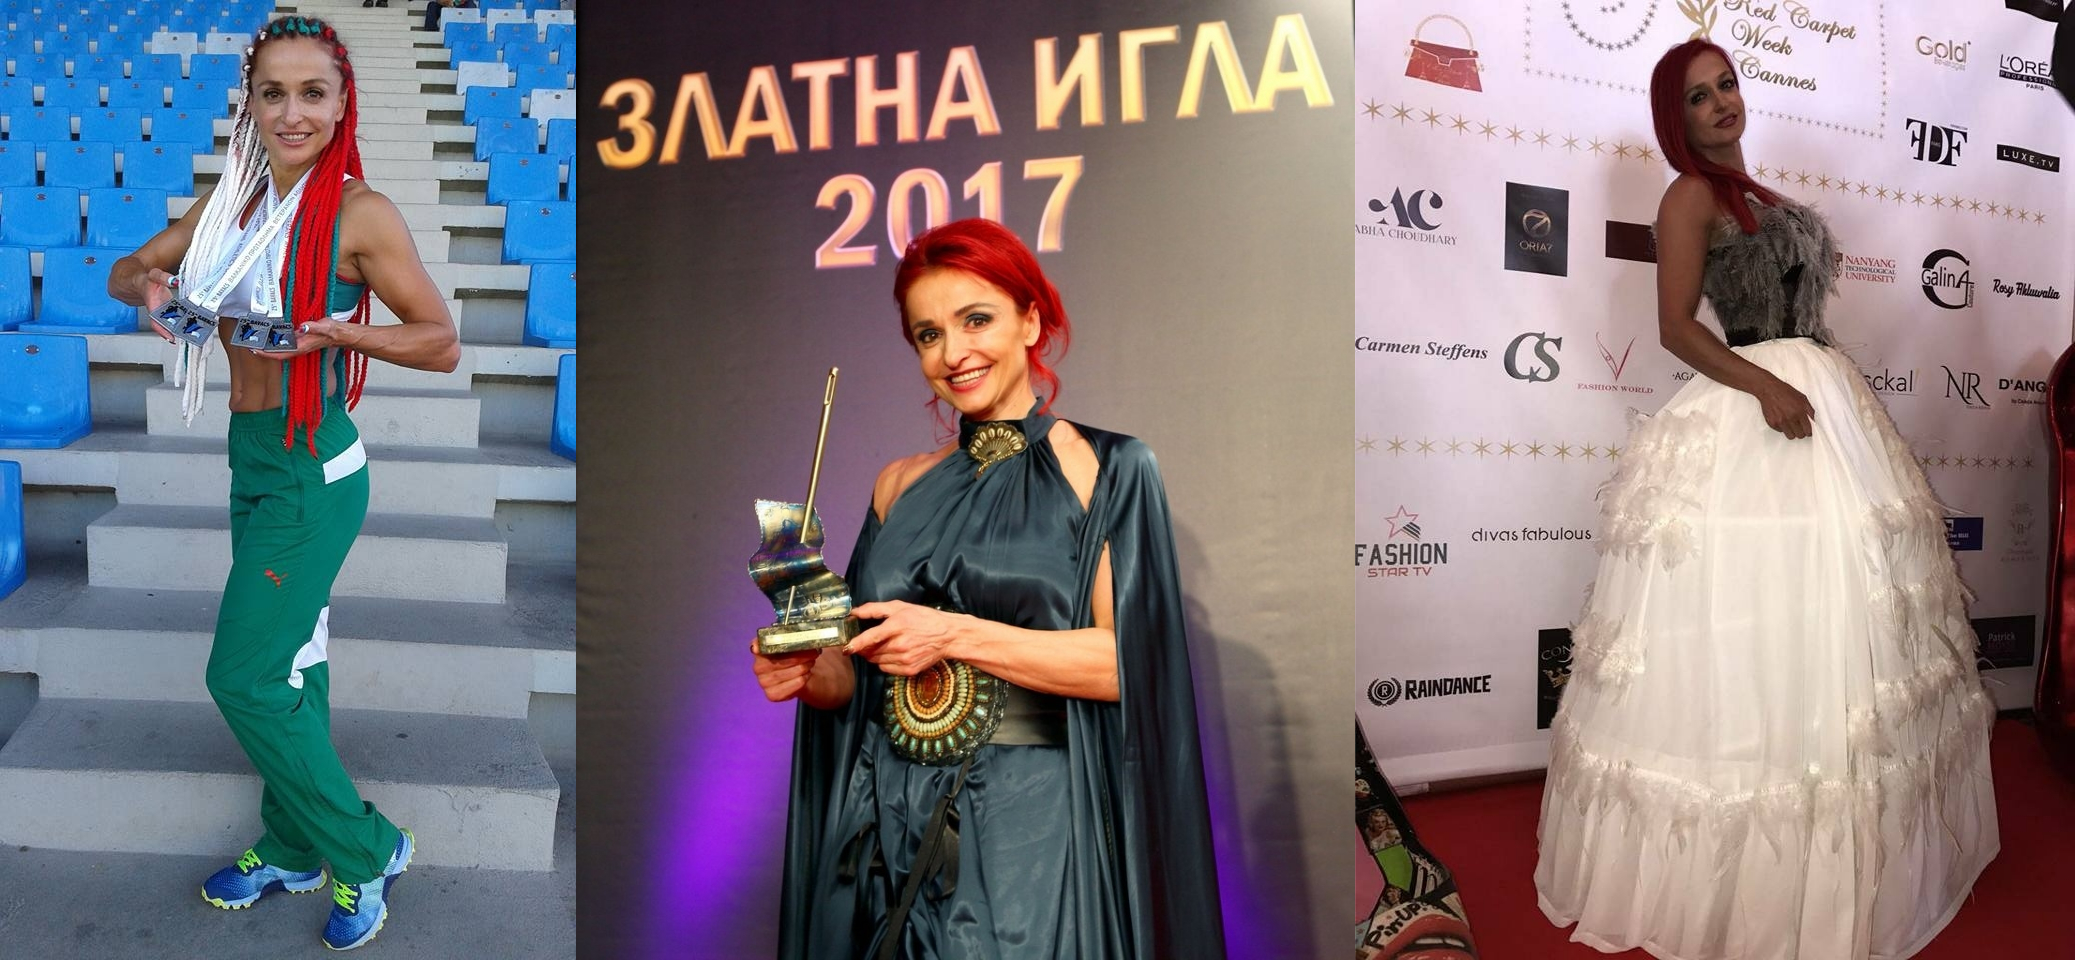 Мерлин Арно е носител на престижната награда "Златна игла" на Академията за мода.